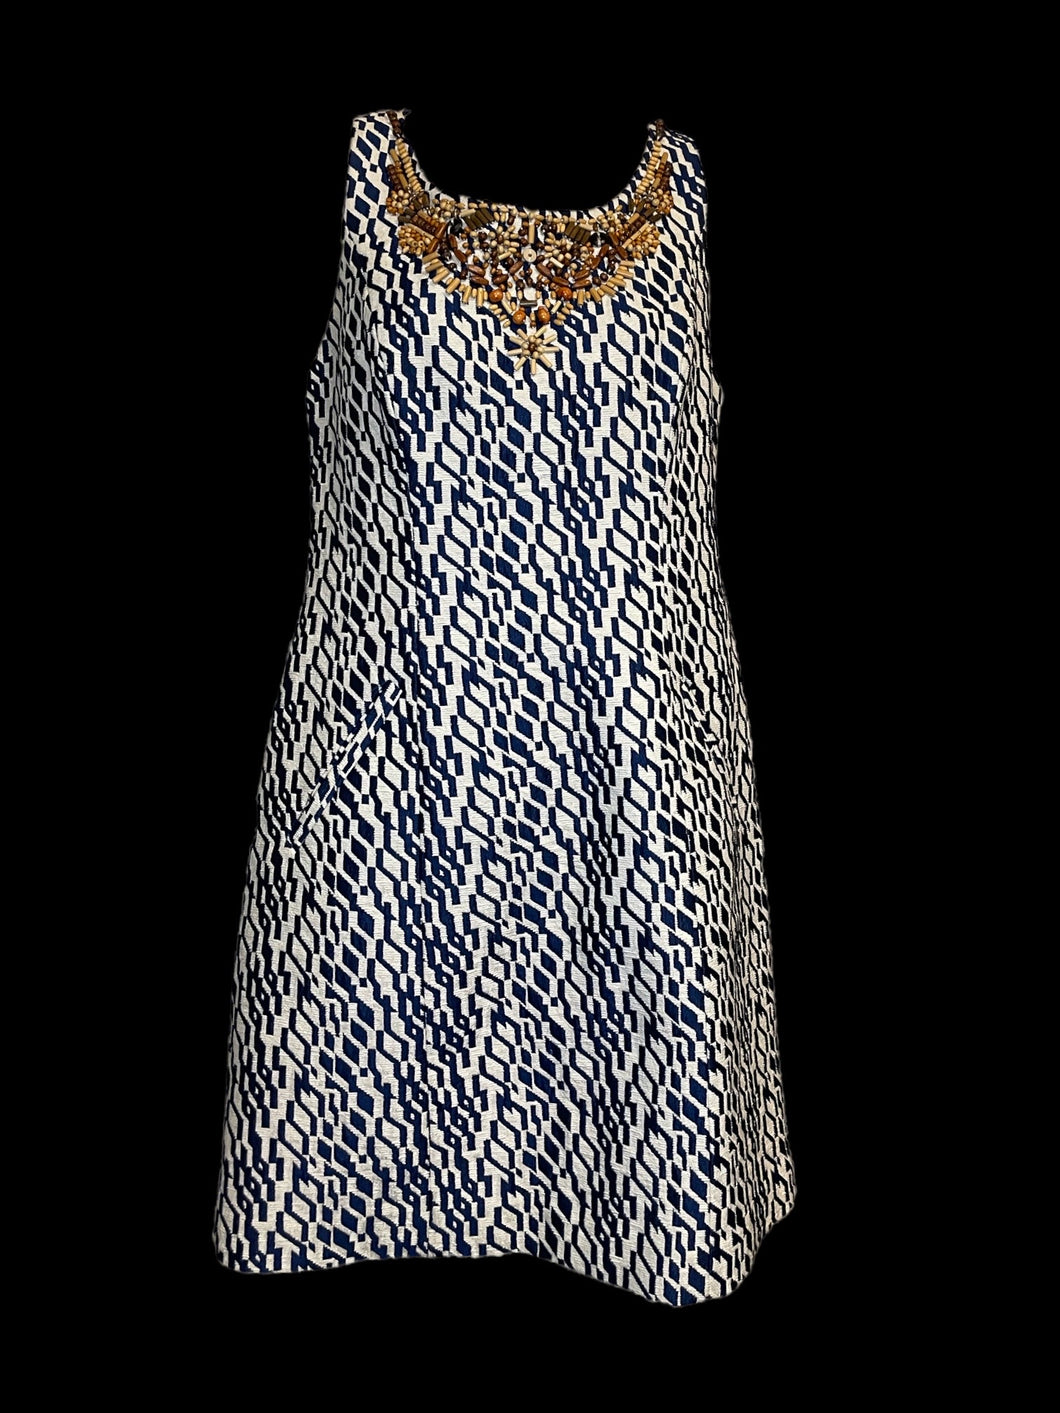 S Dark blue & white geometric pattern sleeveless round neckline bodycon dress w/ wooden bead collar, pockets, & clasp/zipper closure